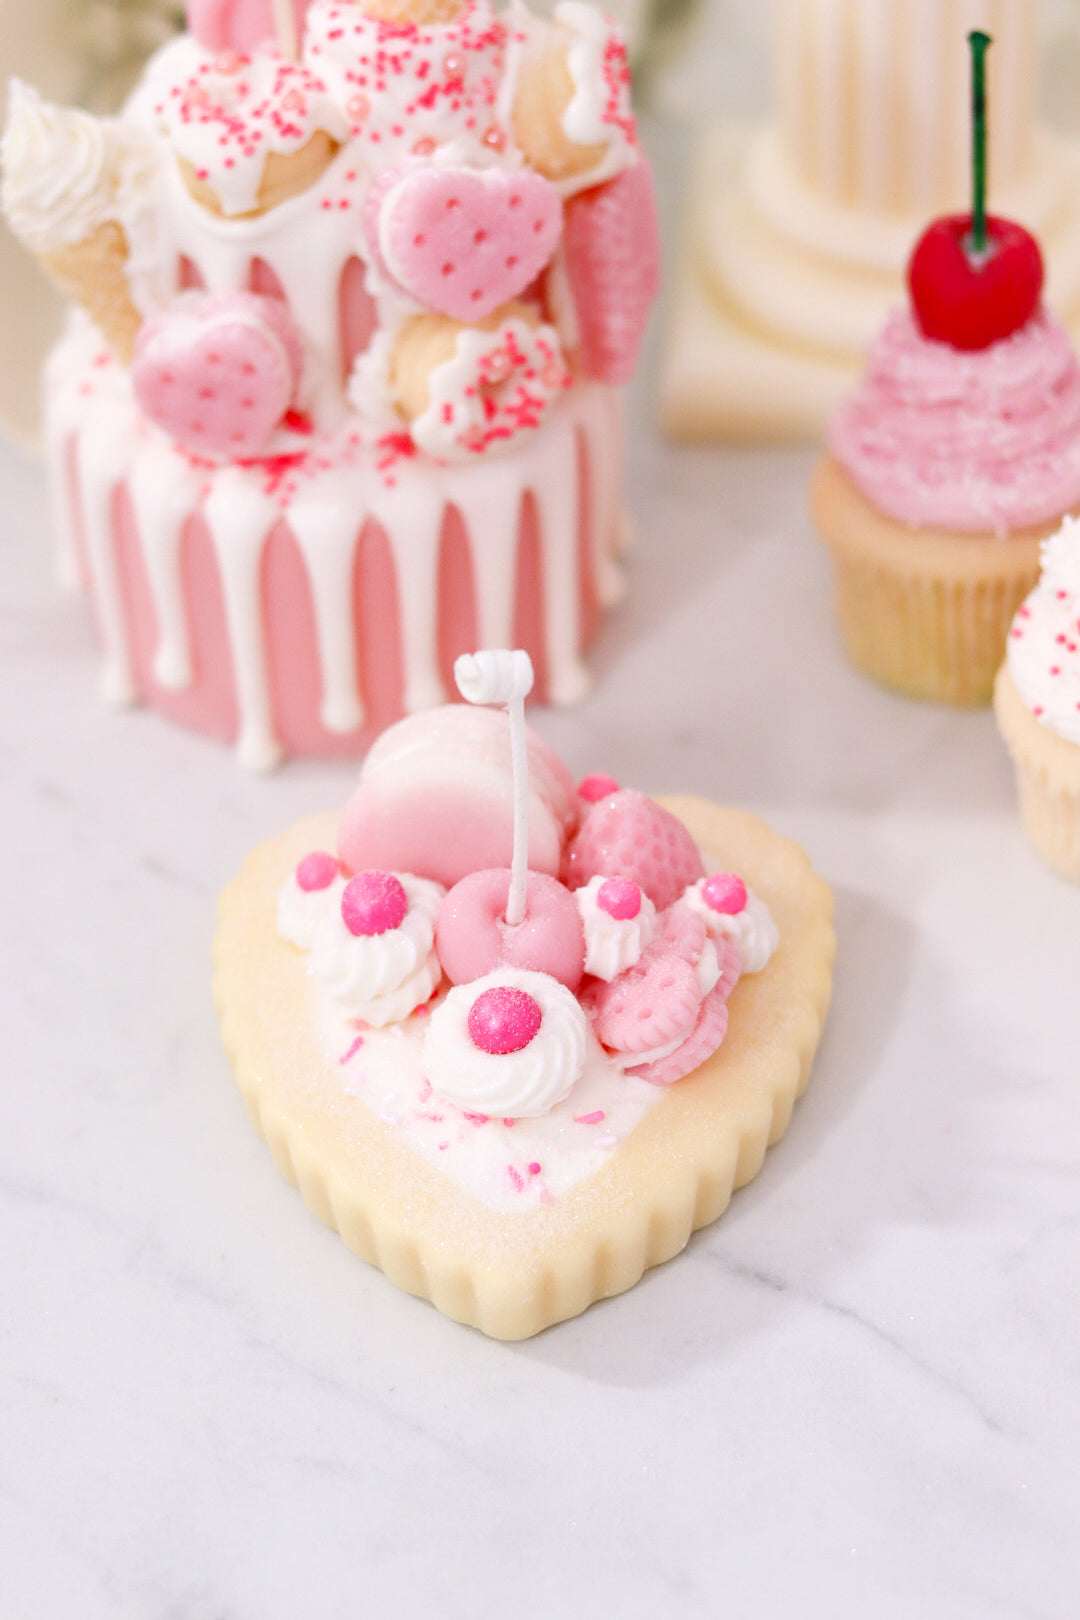 Decorative Heart Shaped Tart Dessert Candle (Pink)